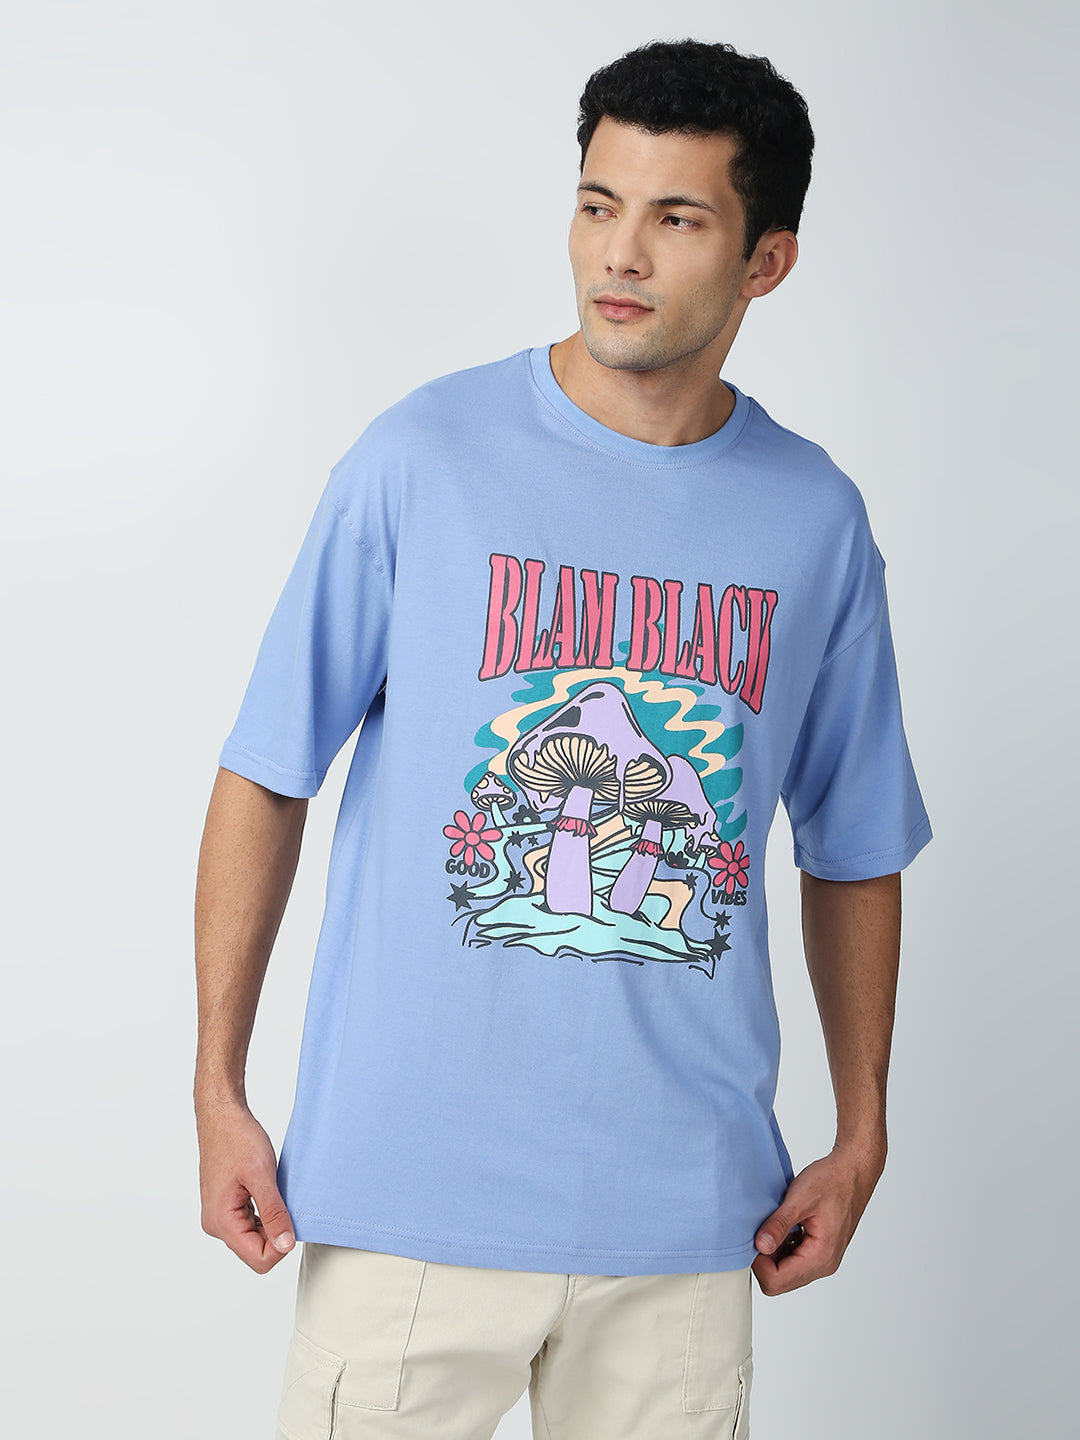 Buy Blamblack Men's Stylish Baggy Powder Blue Color Front Printed Round Neck T-Shirt